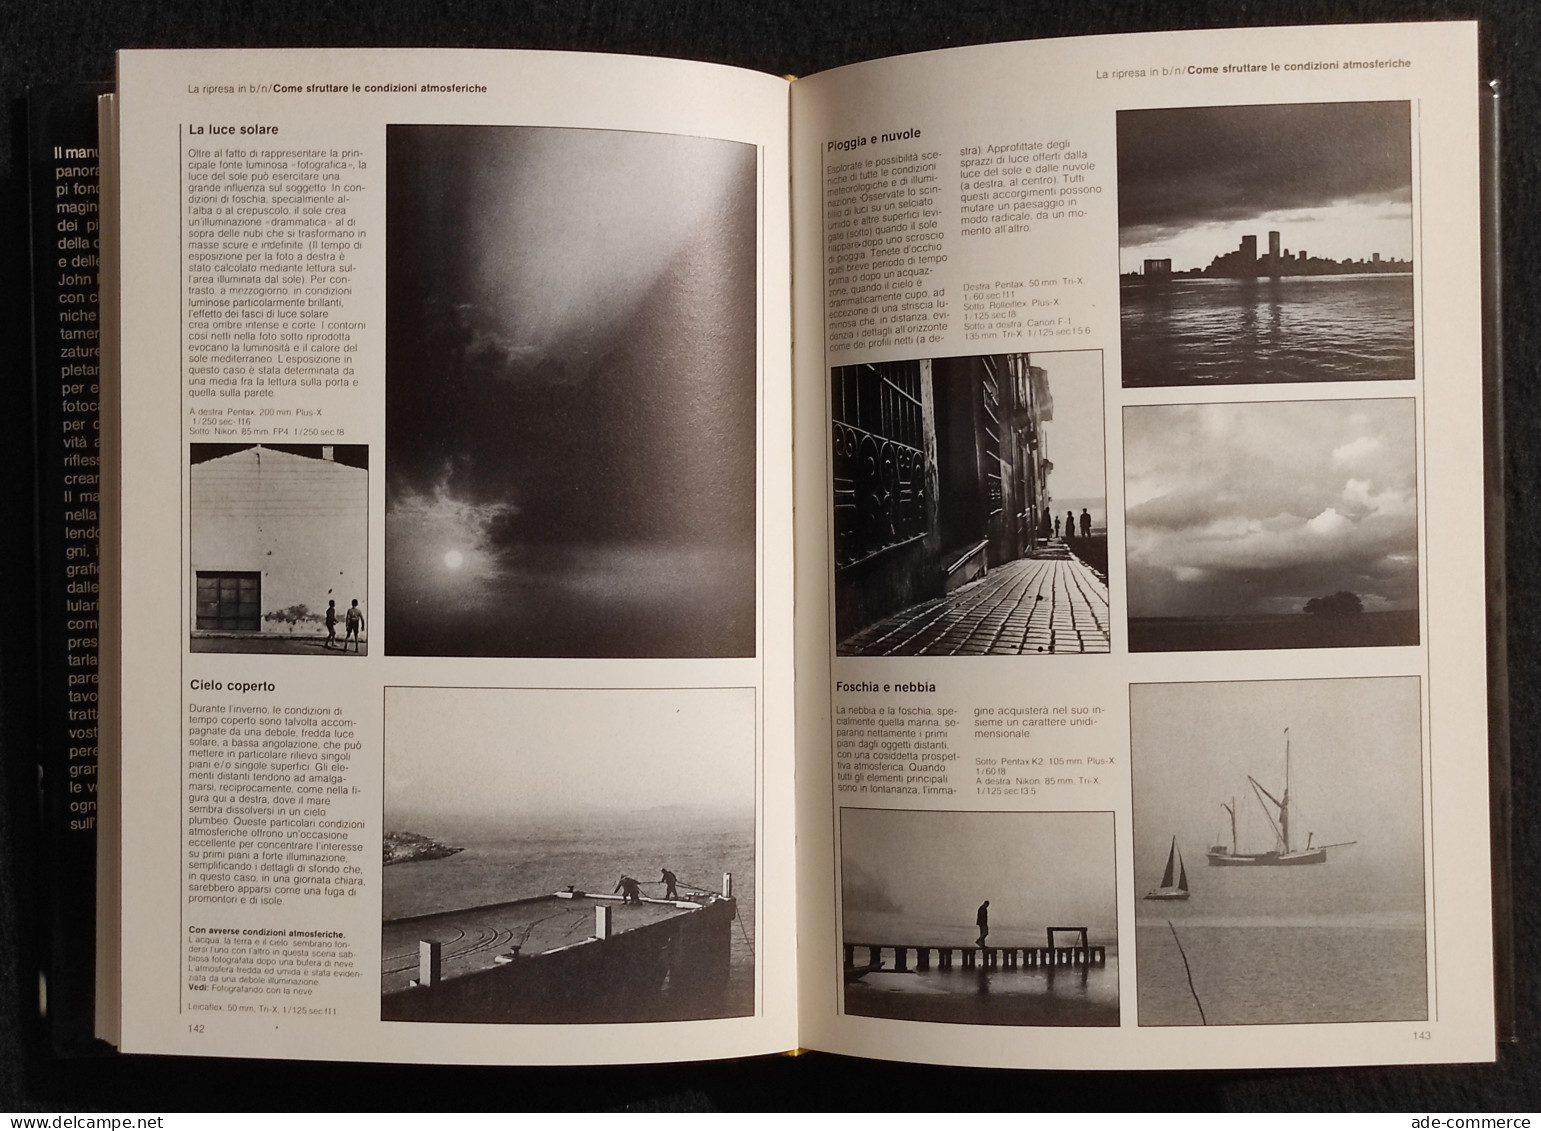 Il Manuale Del Fotografo - J. Hedgecoe - Mondadori - 1980 - Manuales Para Coleccionistas